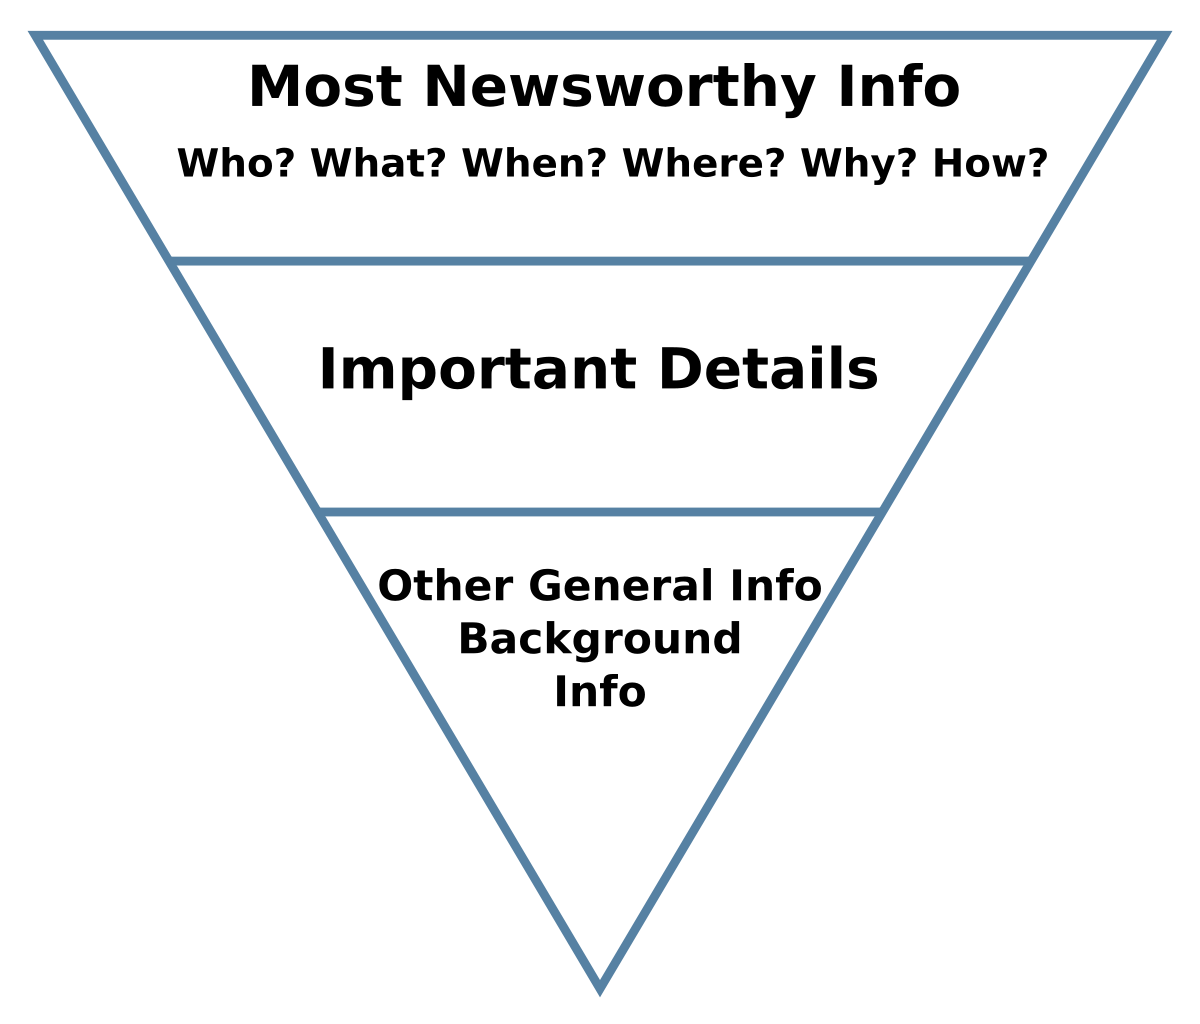 Inverted pyramid of news. Full description below, under summary field labelled 'Open image description'